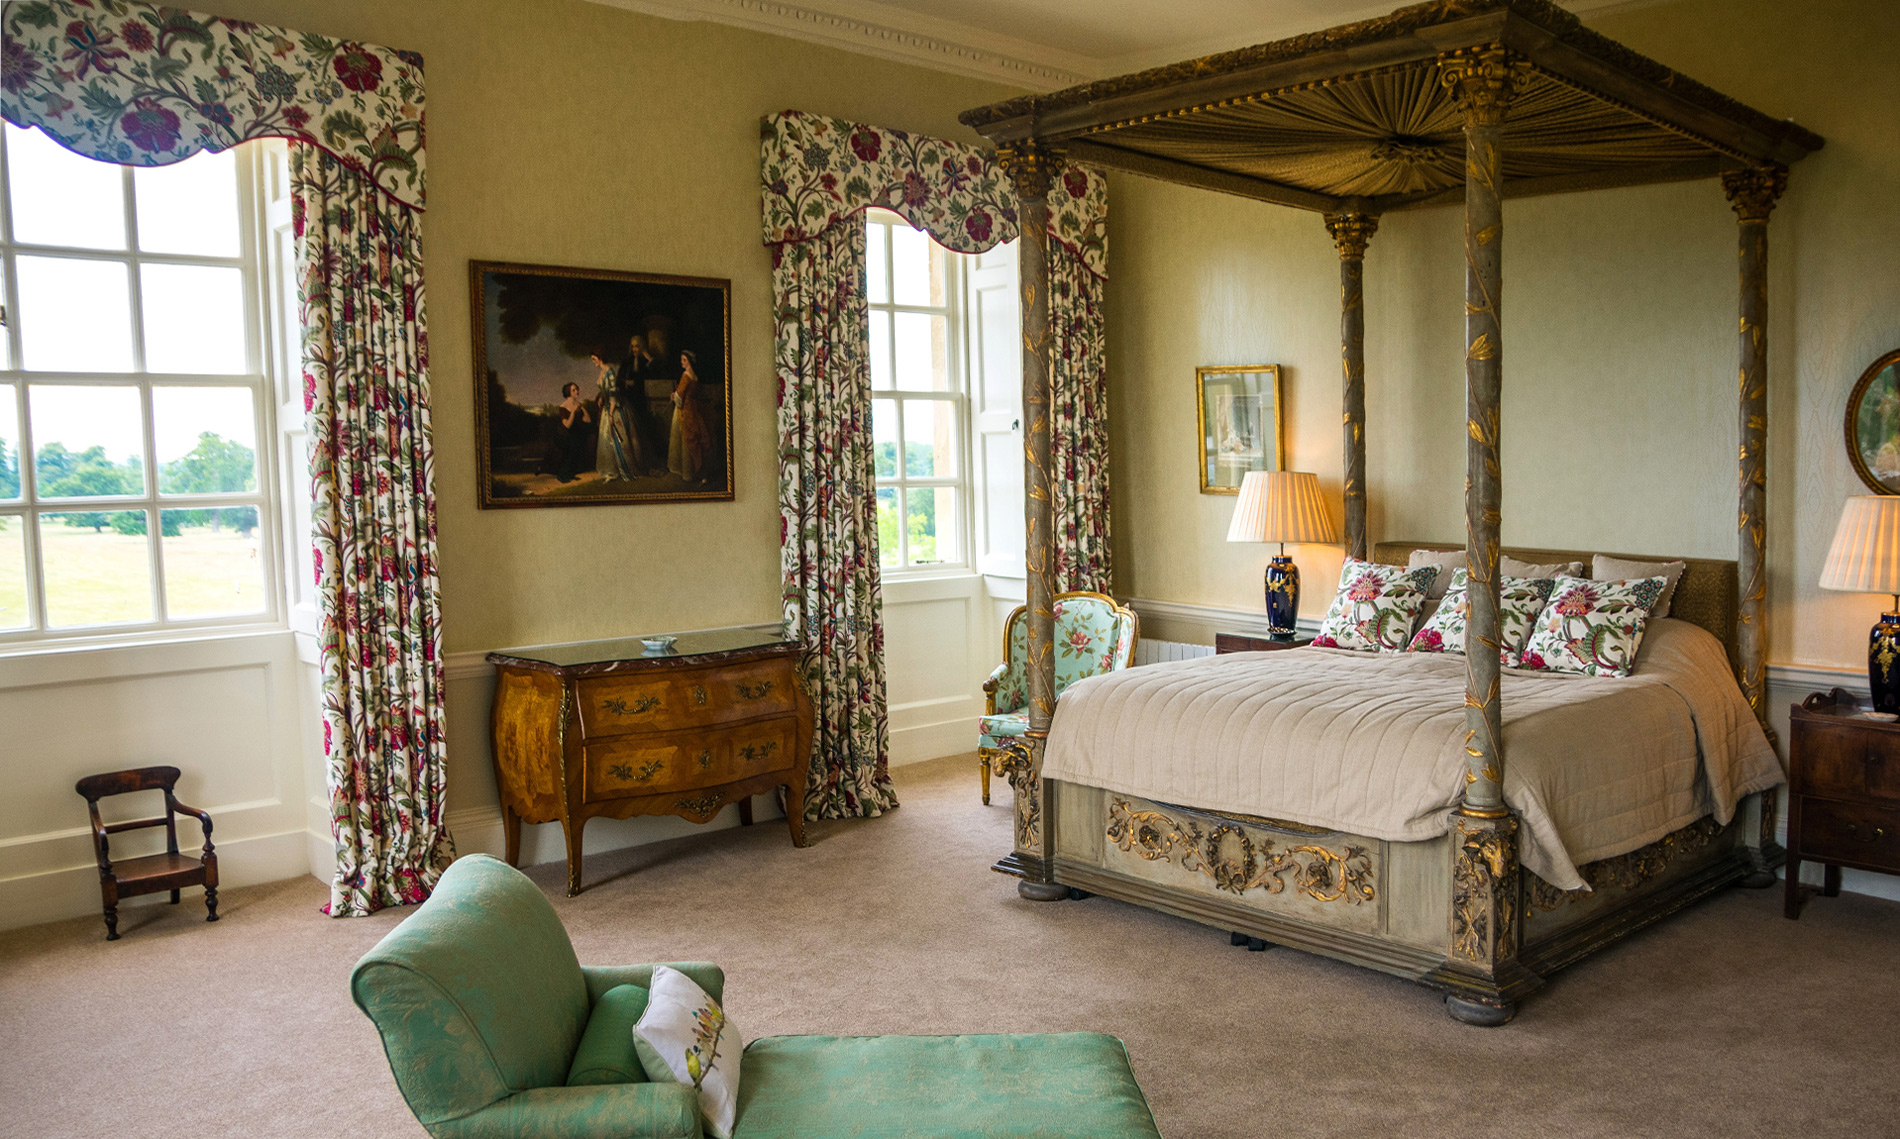 The Exeter Bedroom at Kirtlington Park